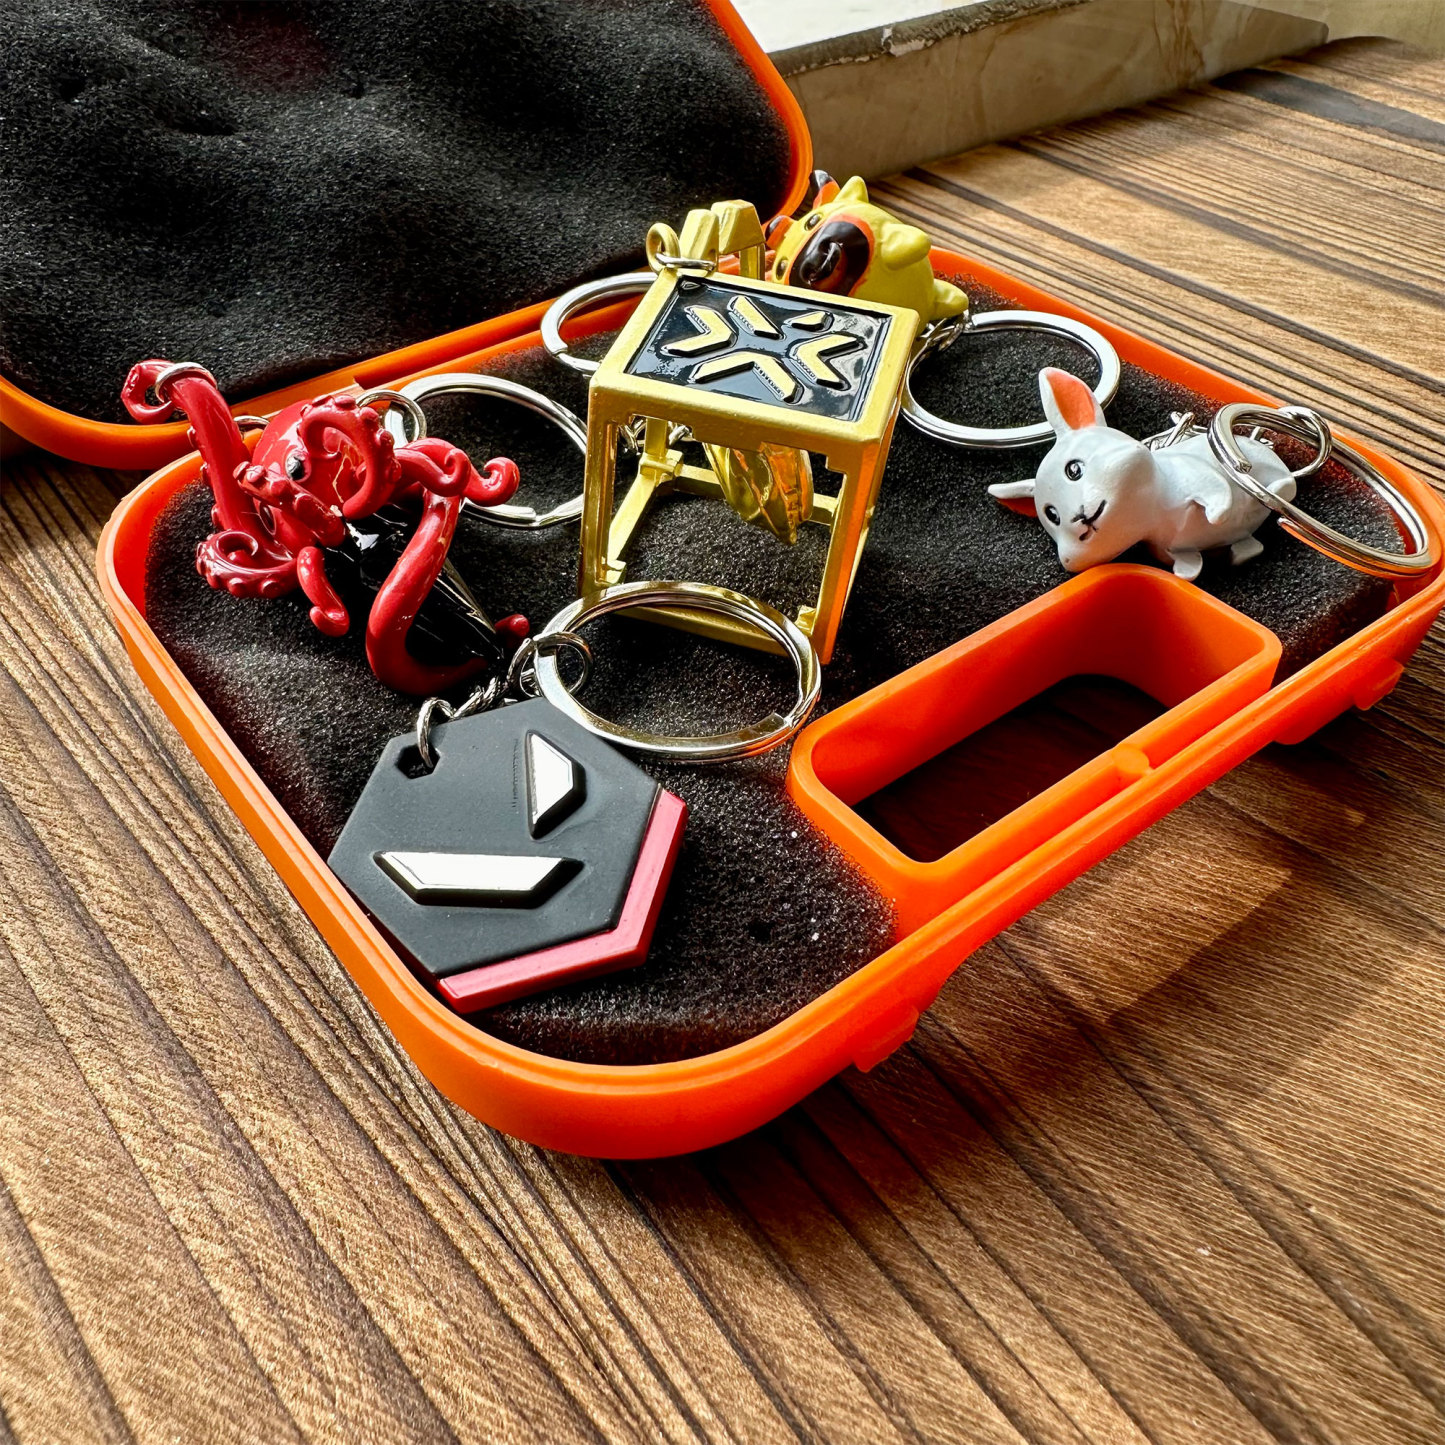 Game Metal Cool Zodiac Pendant Keychain Gift Box